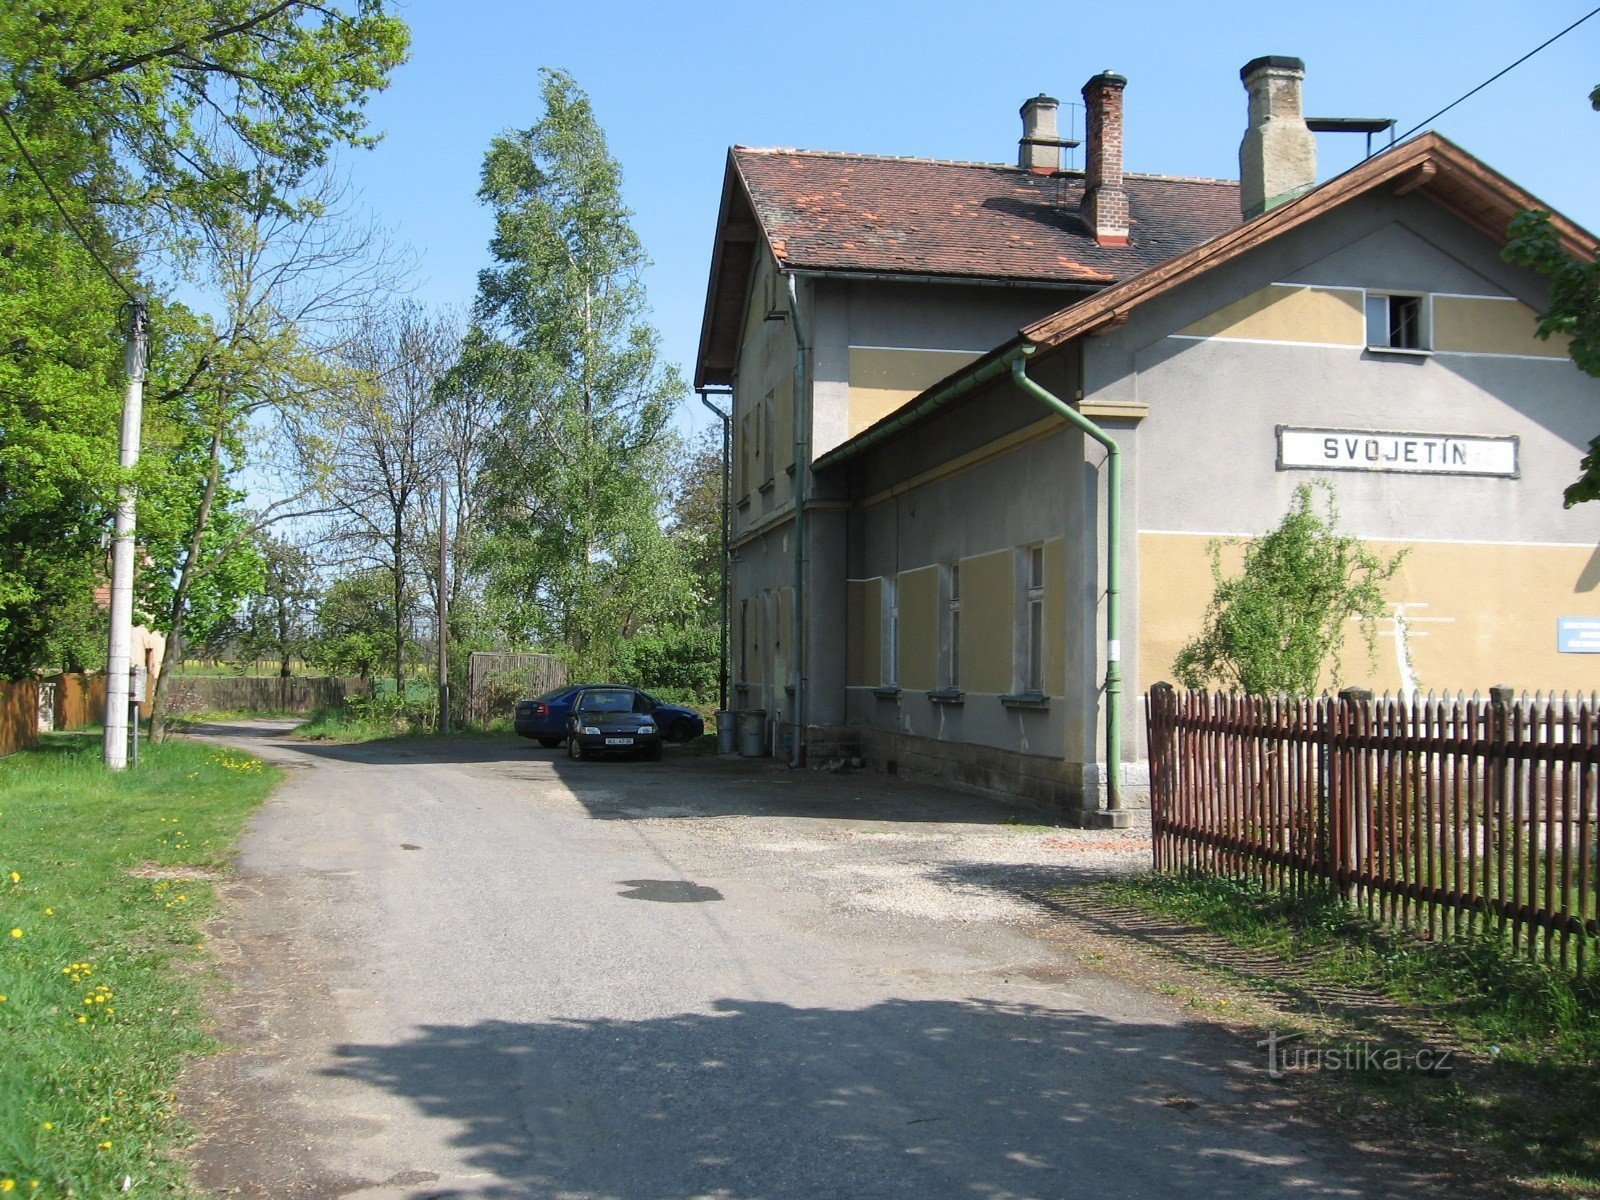 Parcare în fața stației Svojetín